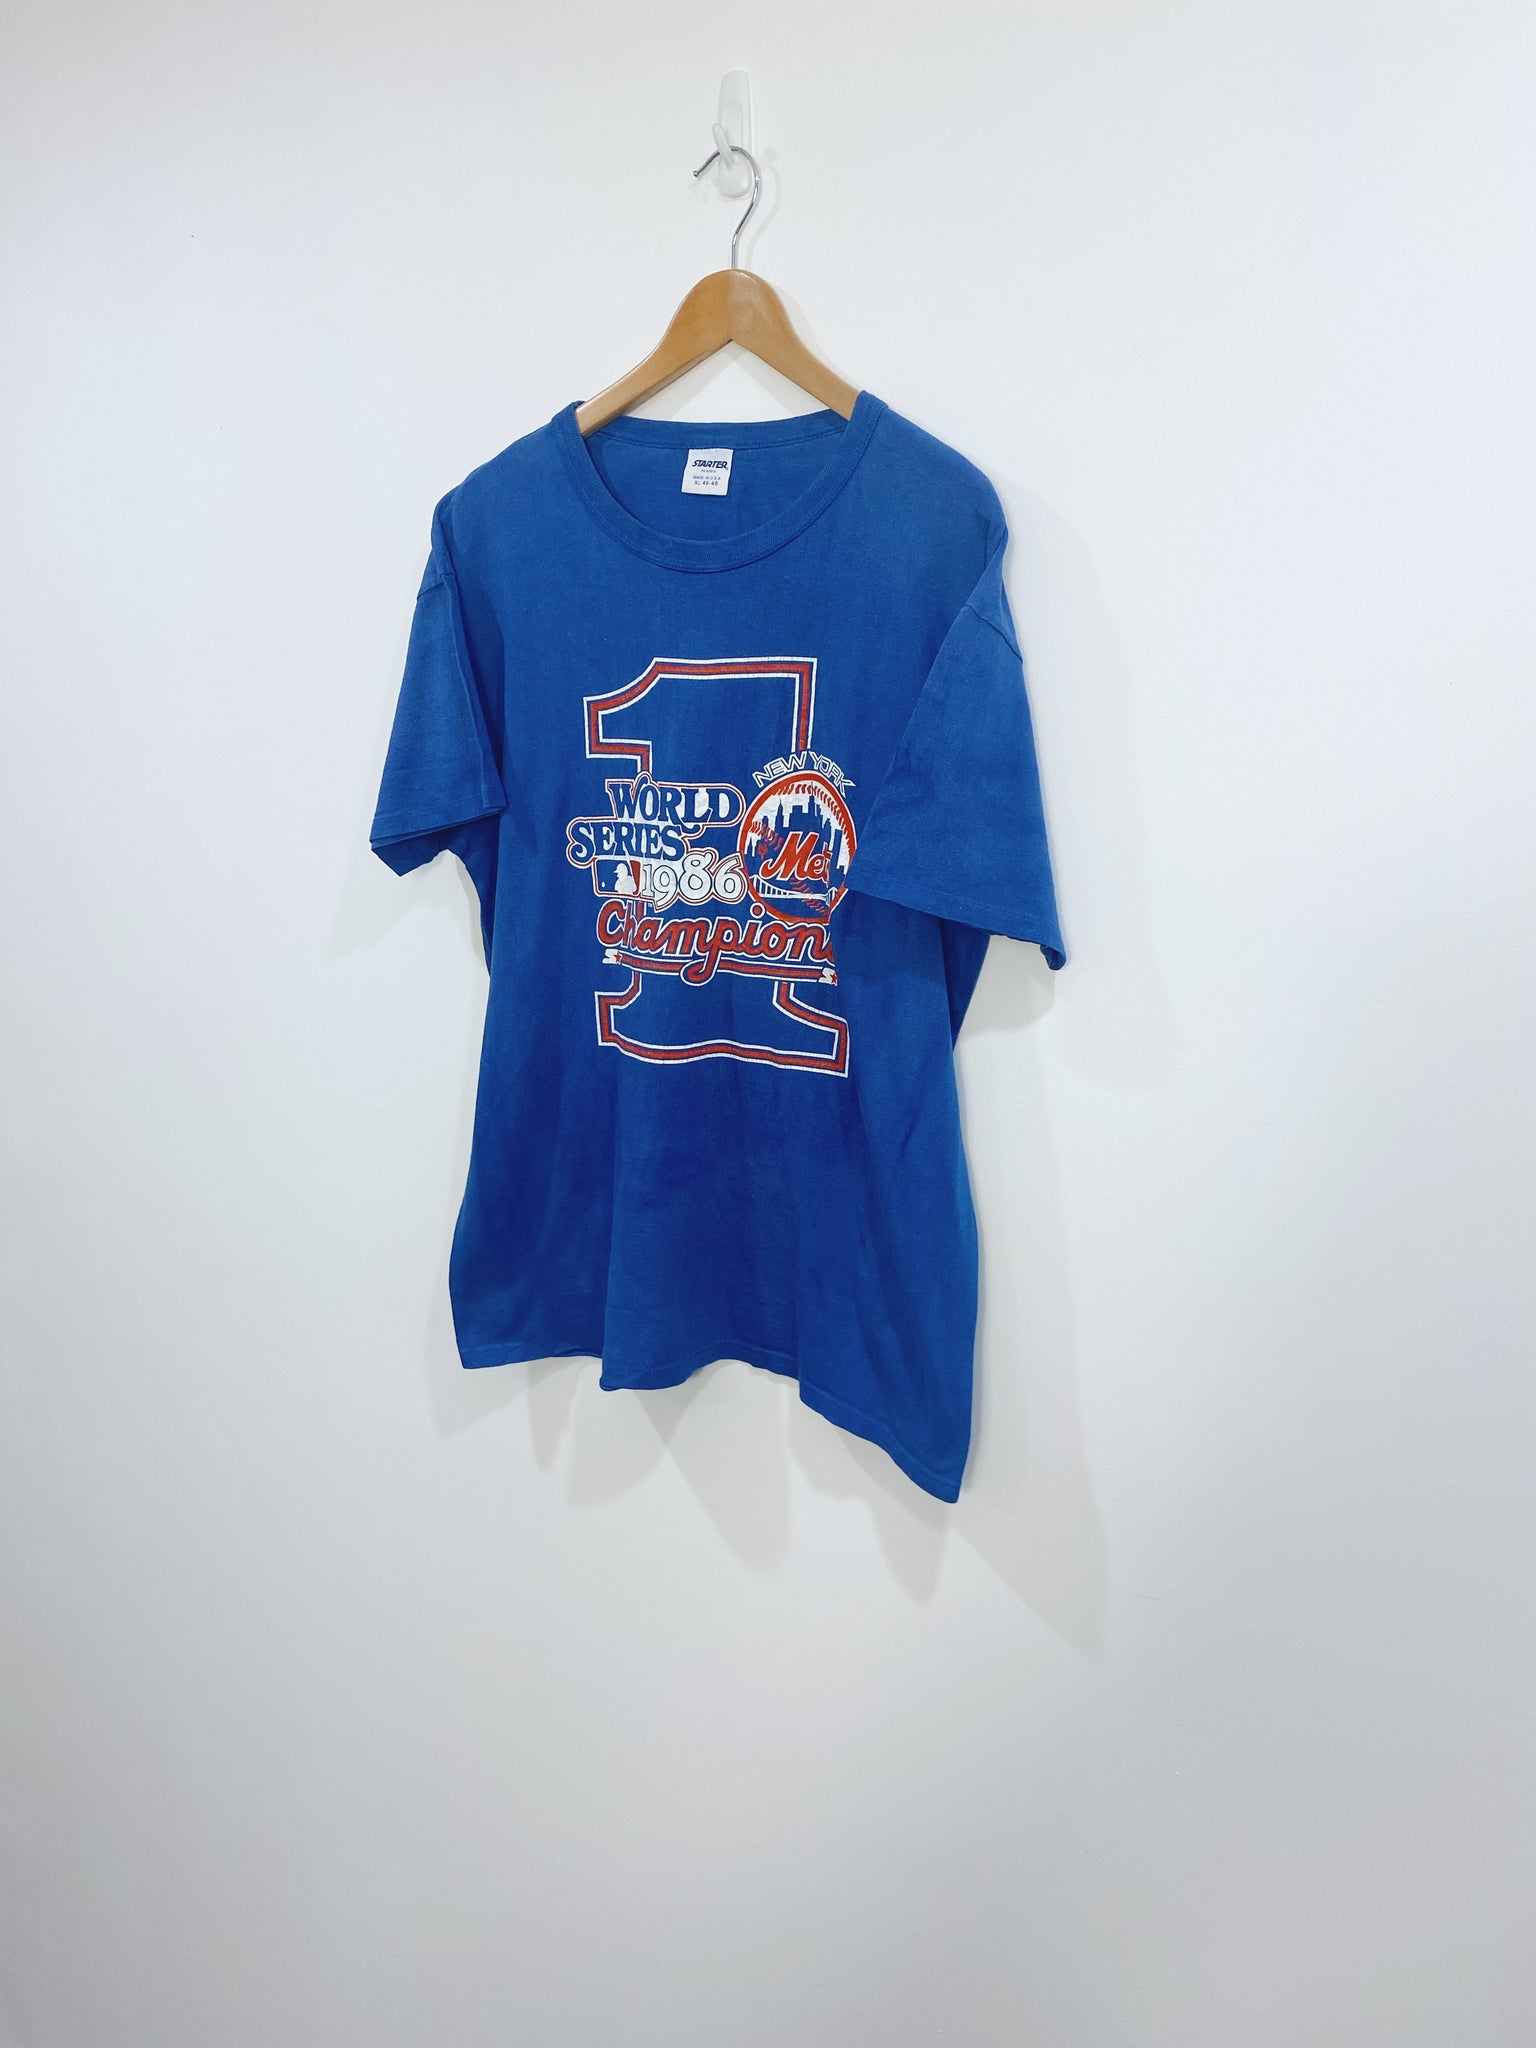 Vintage 1986 New York Mets Championship T-shirt M